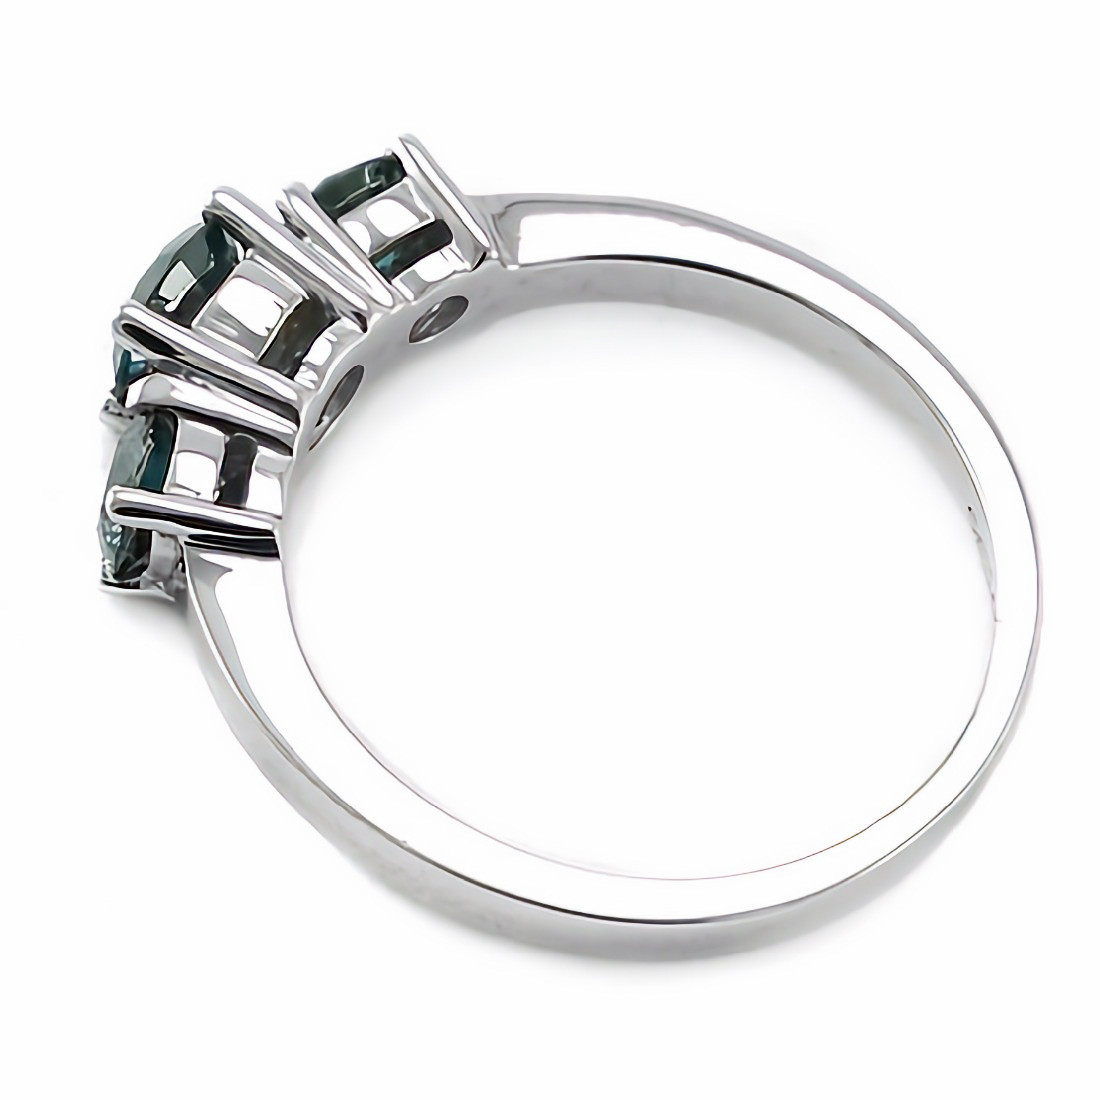 Emerald-Cut Fancy Blue Diamond 3-Stone Engagement Ring